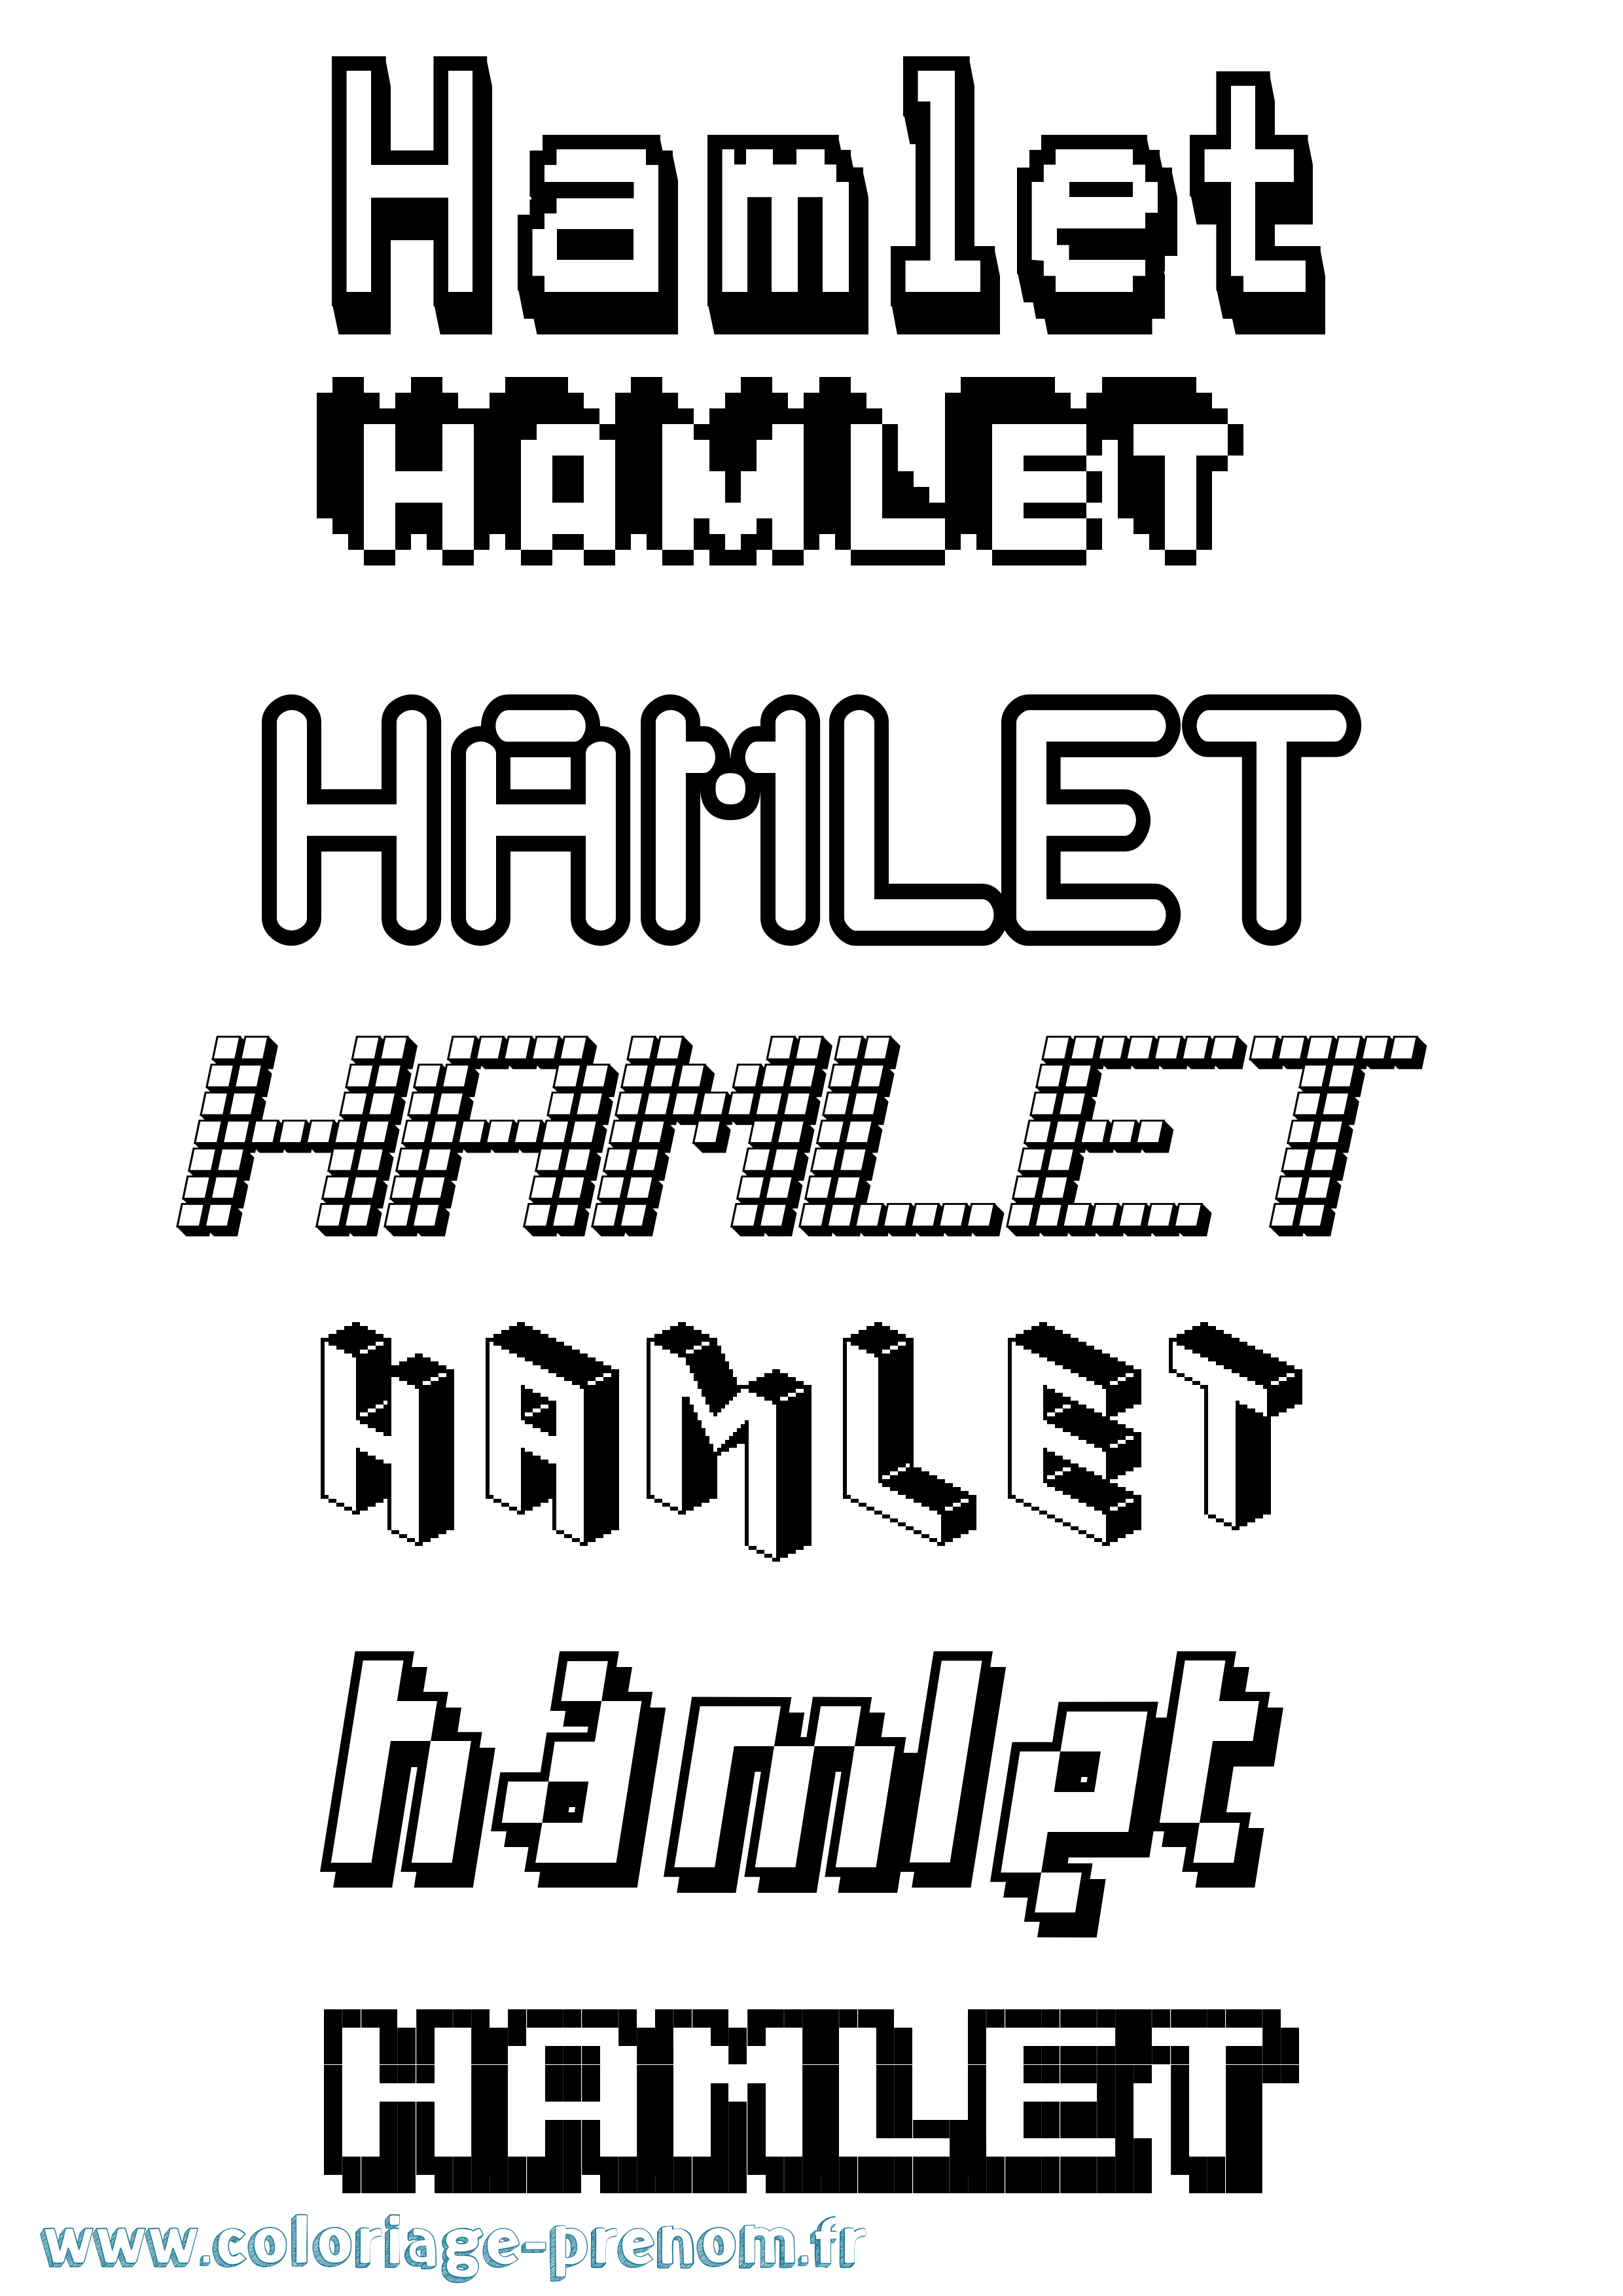 Coloriage prénom Hamlet Pixel